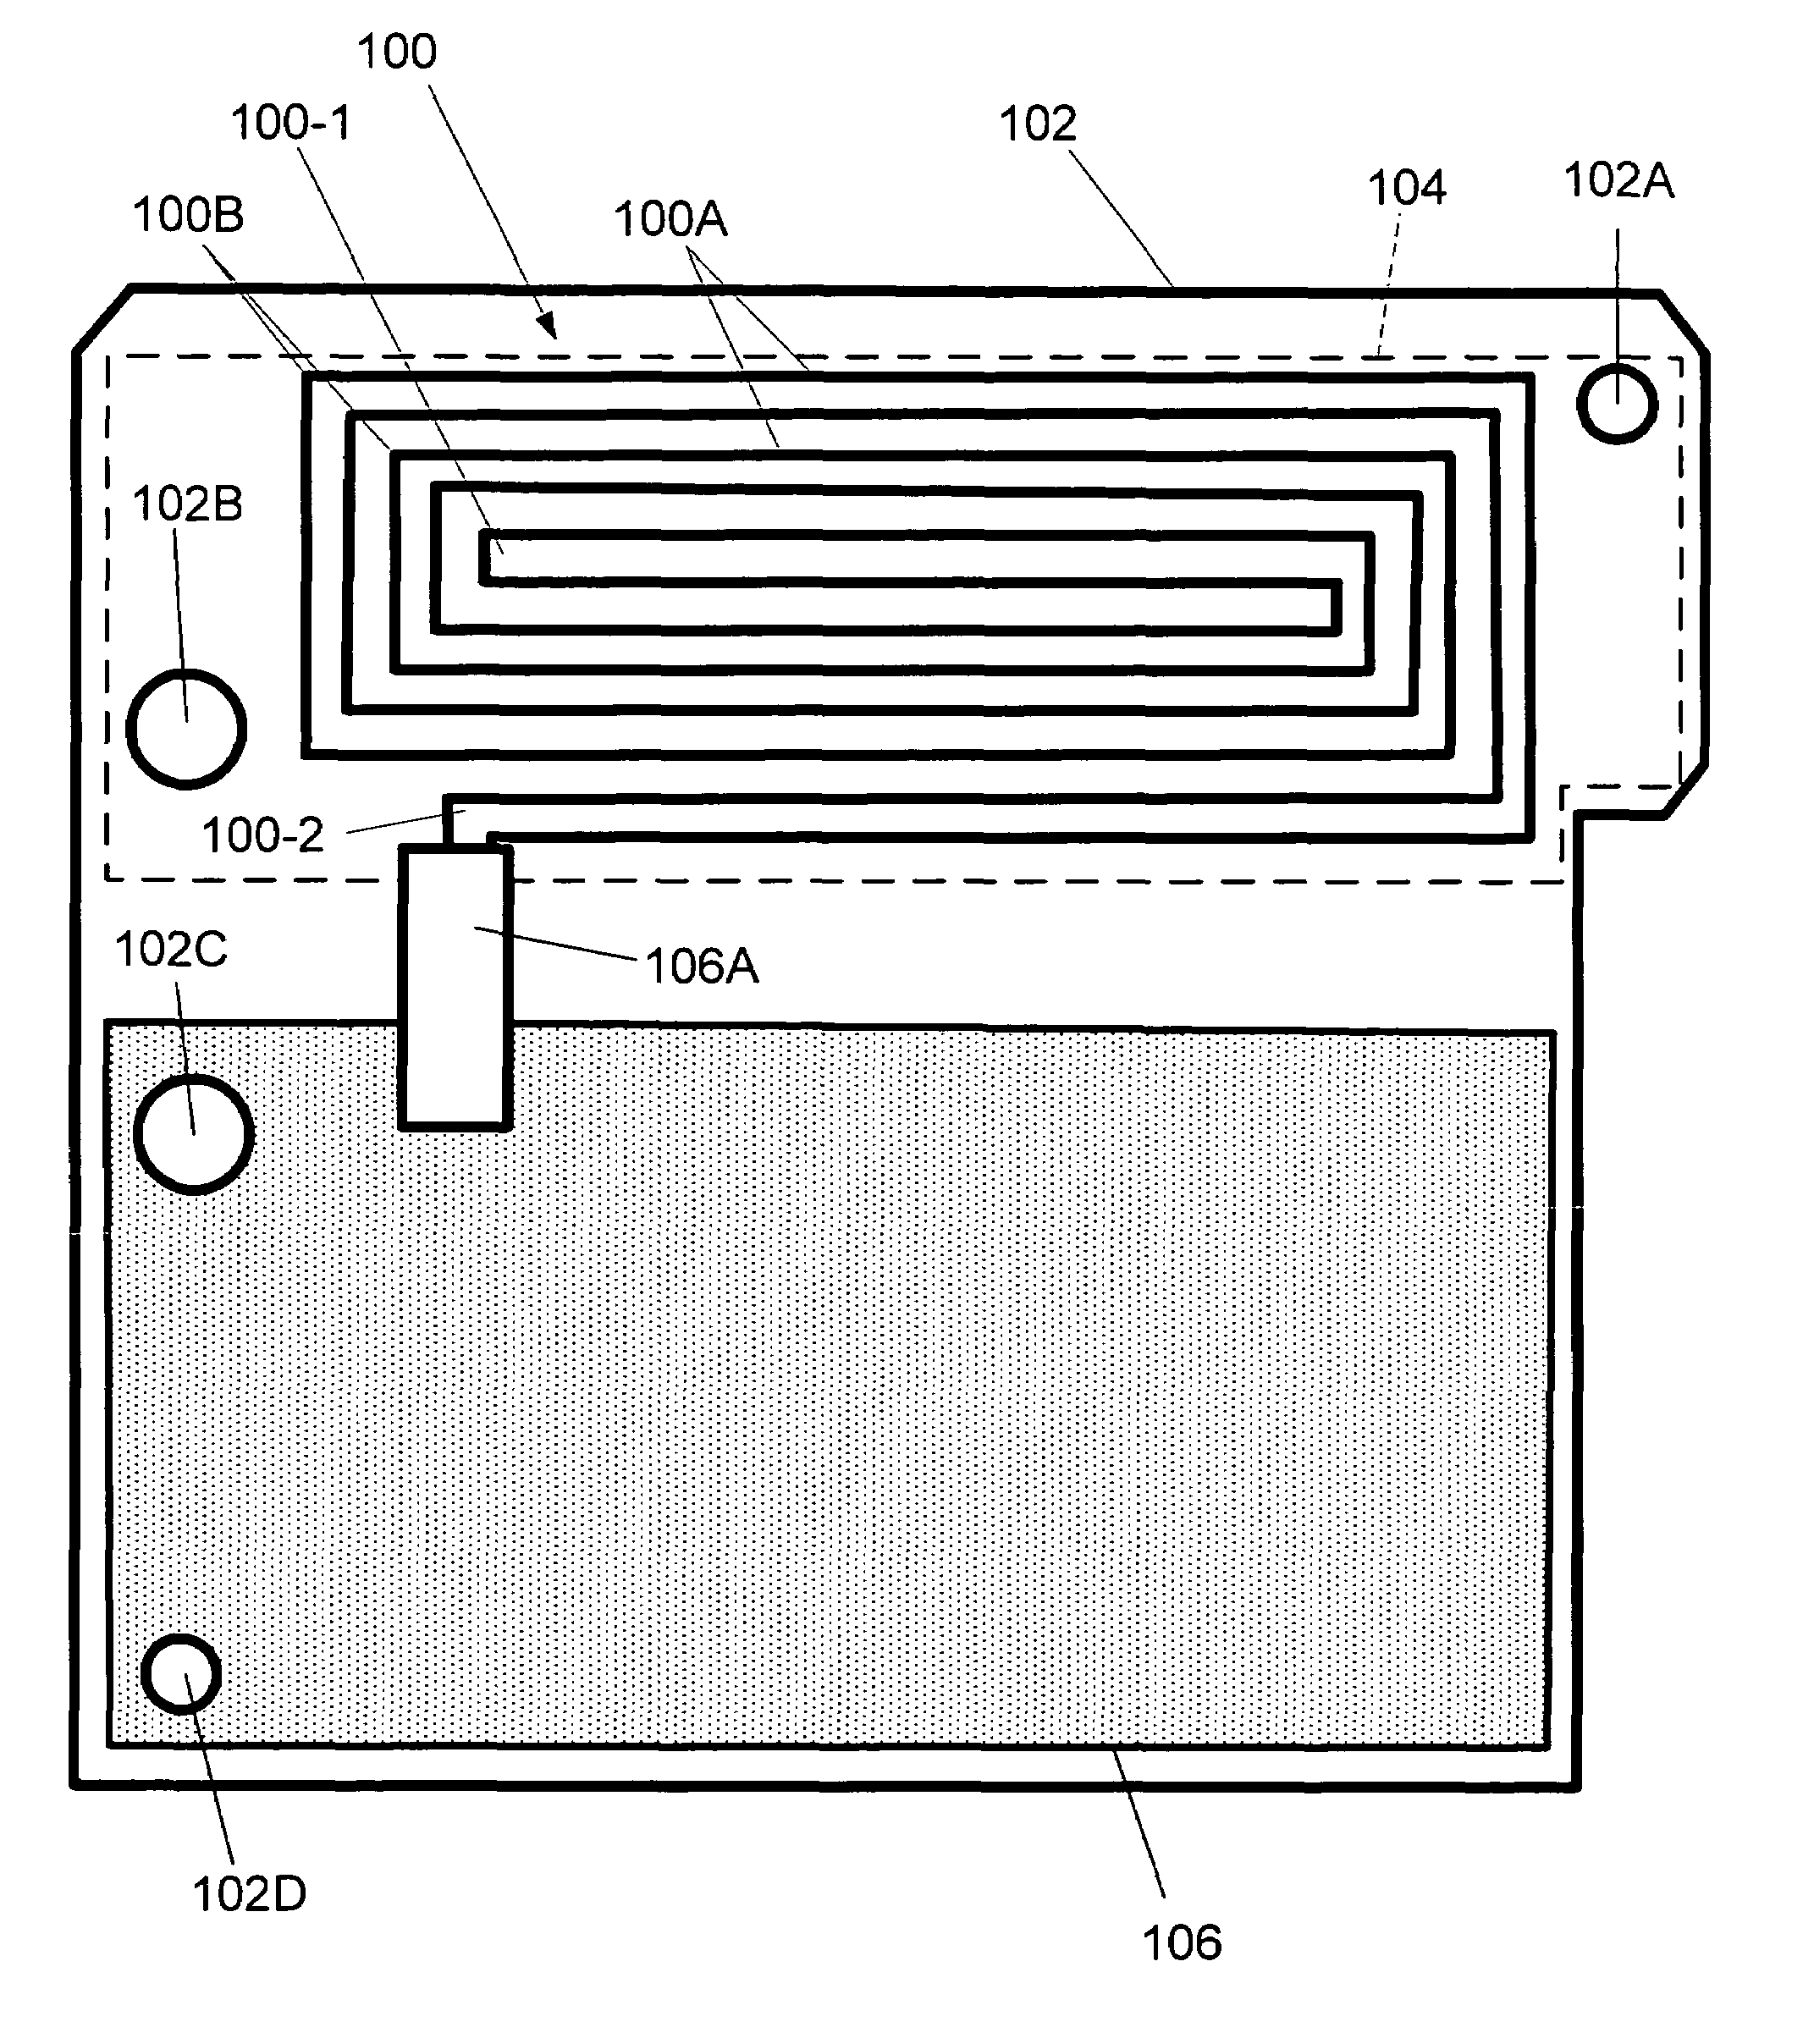 Microstrip antenna for RF receiver